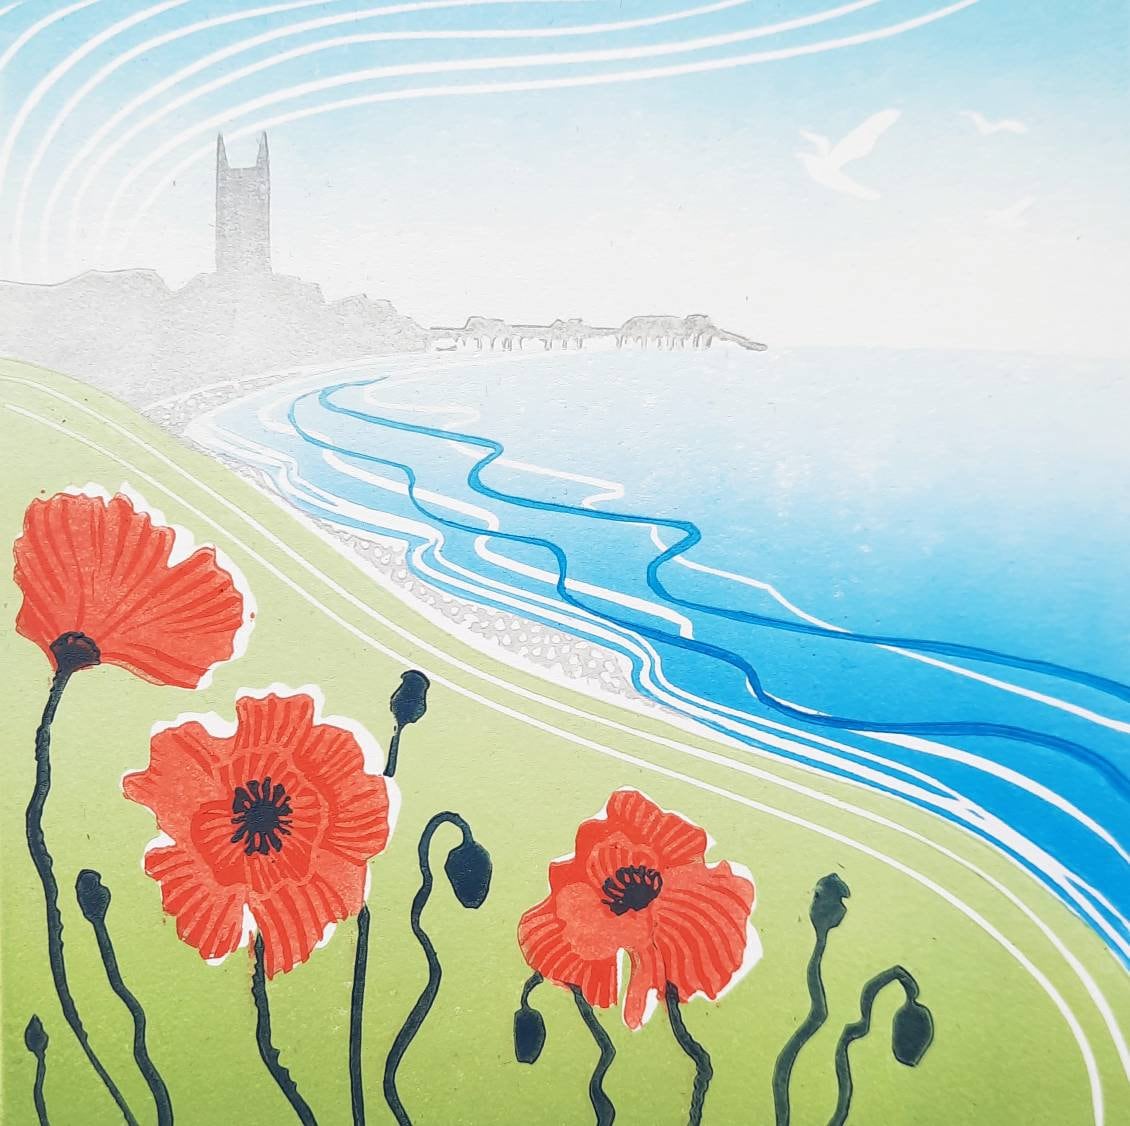 Poppyland - Original Lino Print | Cromer, Norfolk | Landscape Art | Unframed